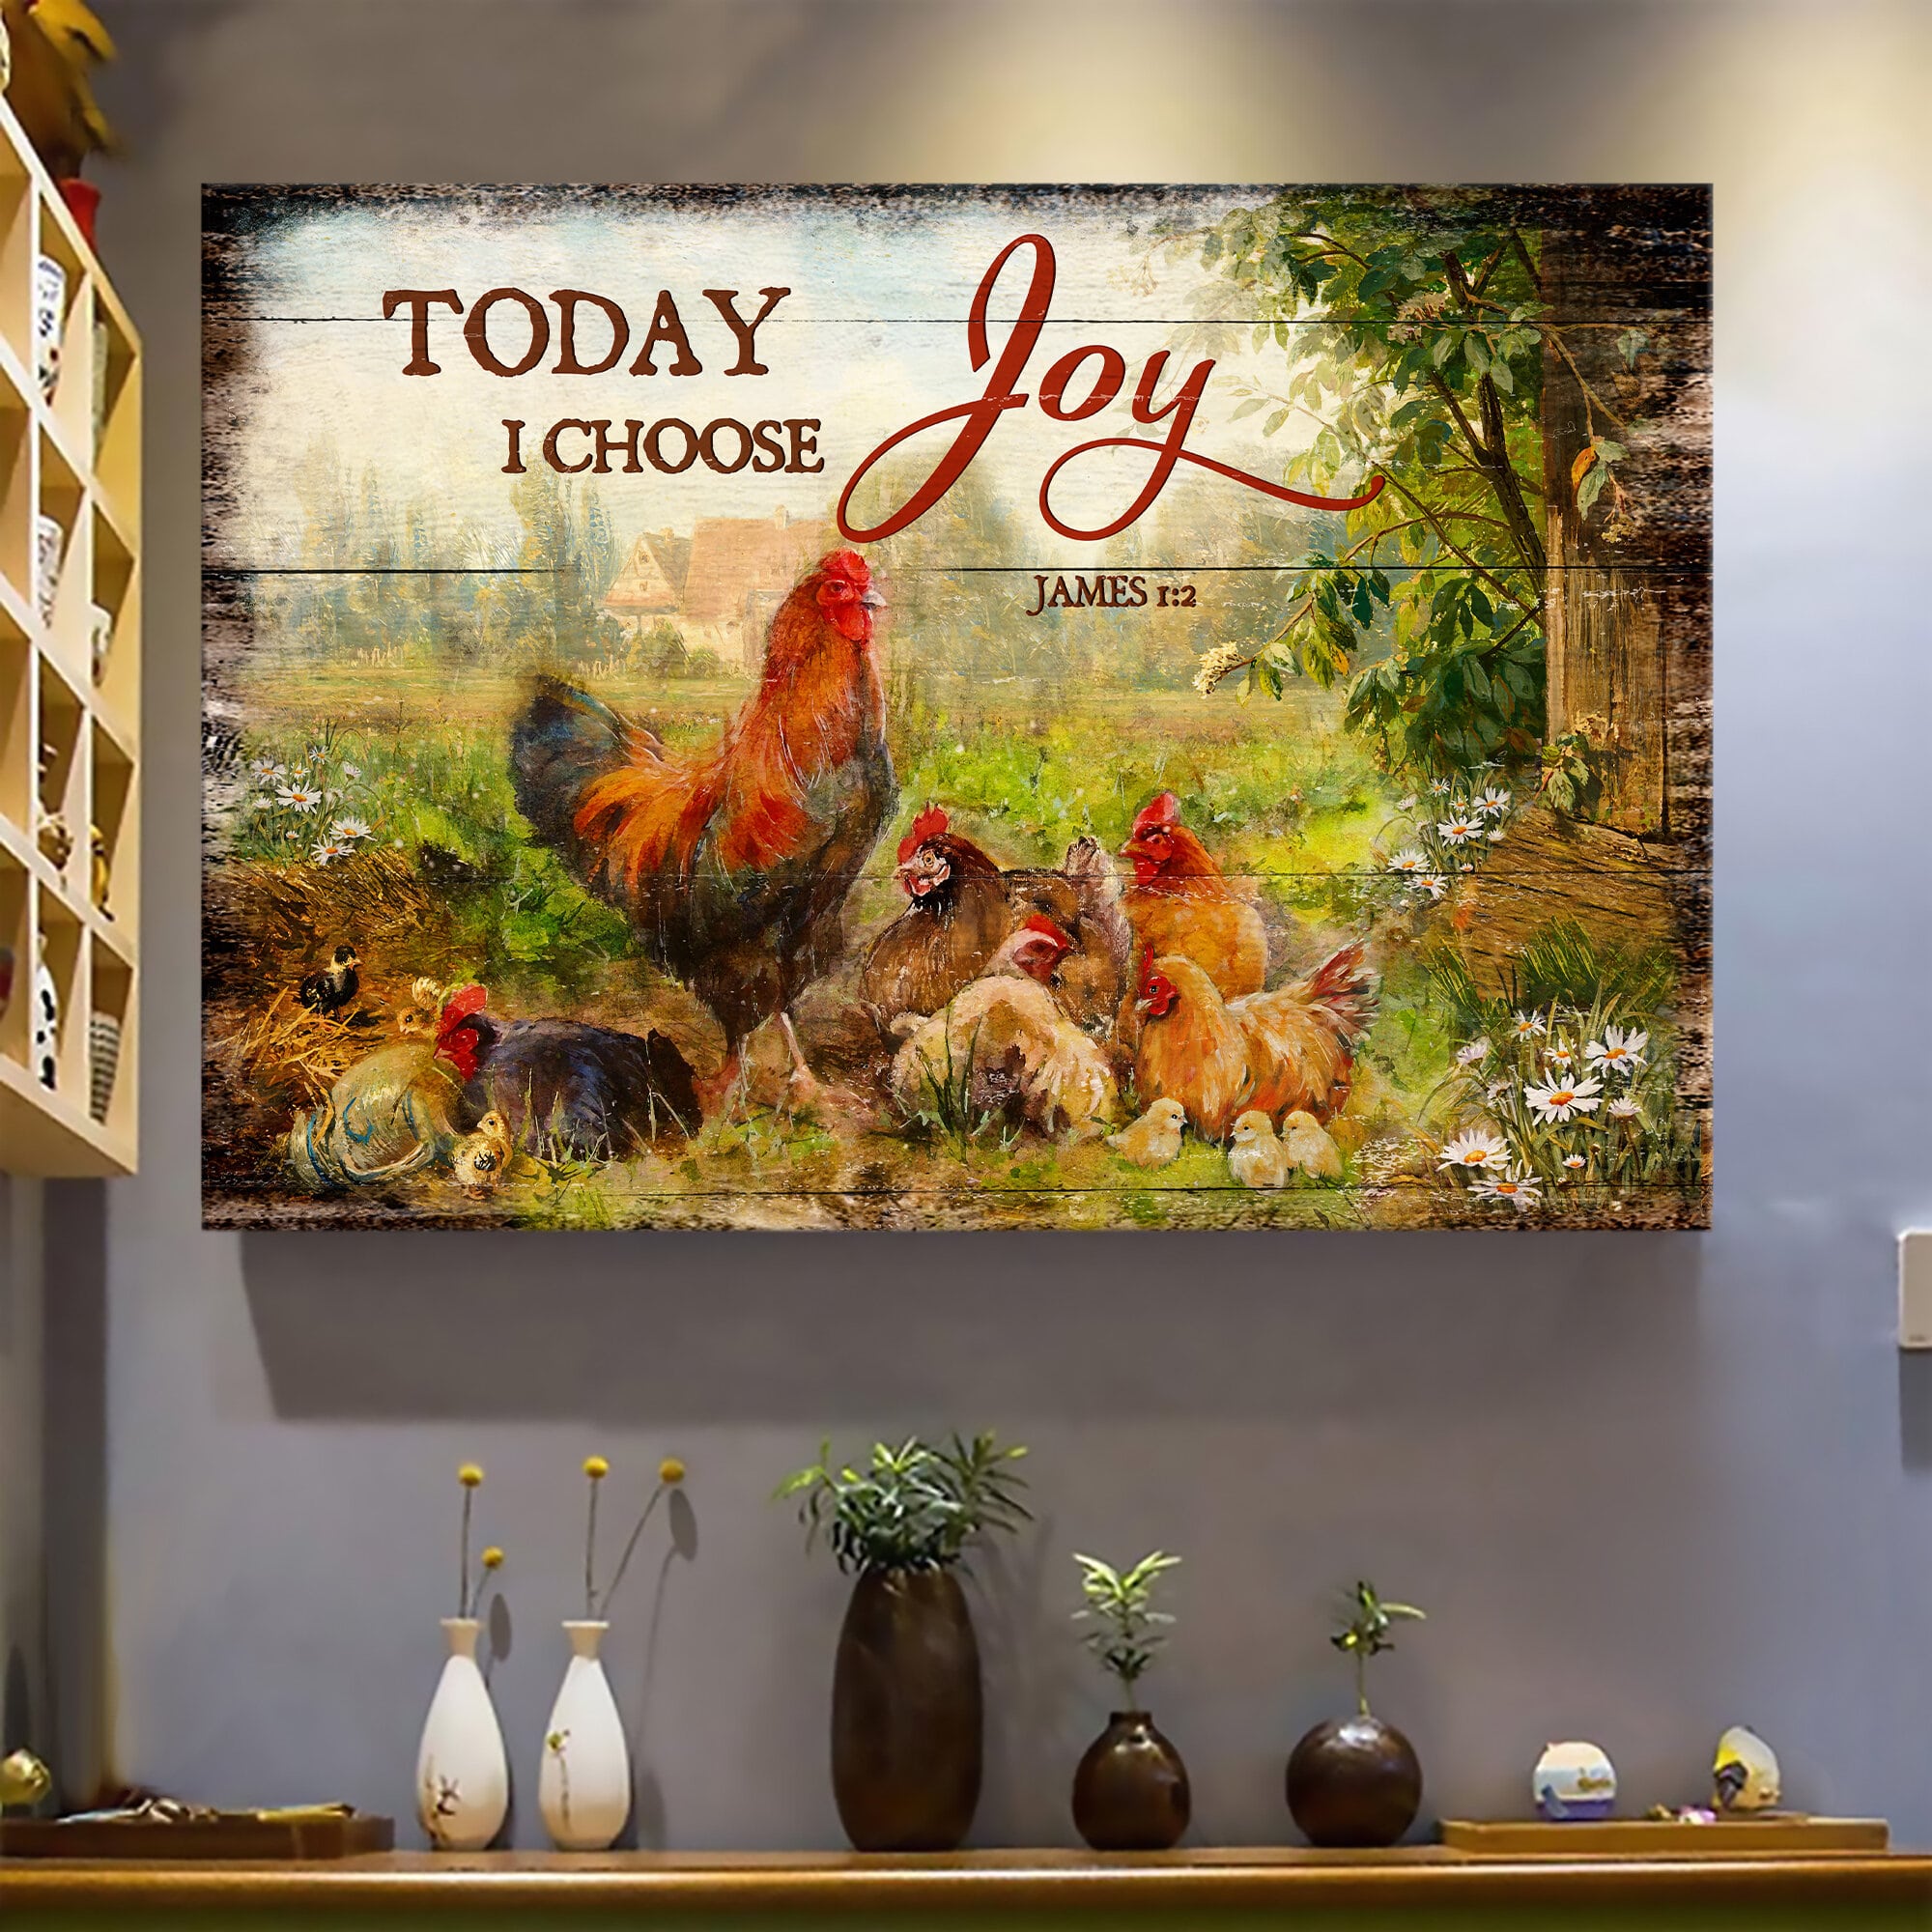 Chickens Family, Peaceful farm, Today I choose joy - Jesus Landscape Canvas Prints, Wall Art